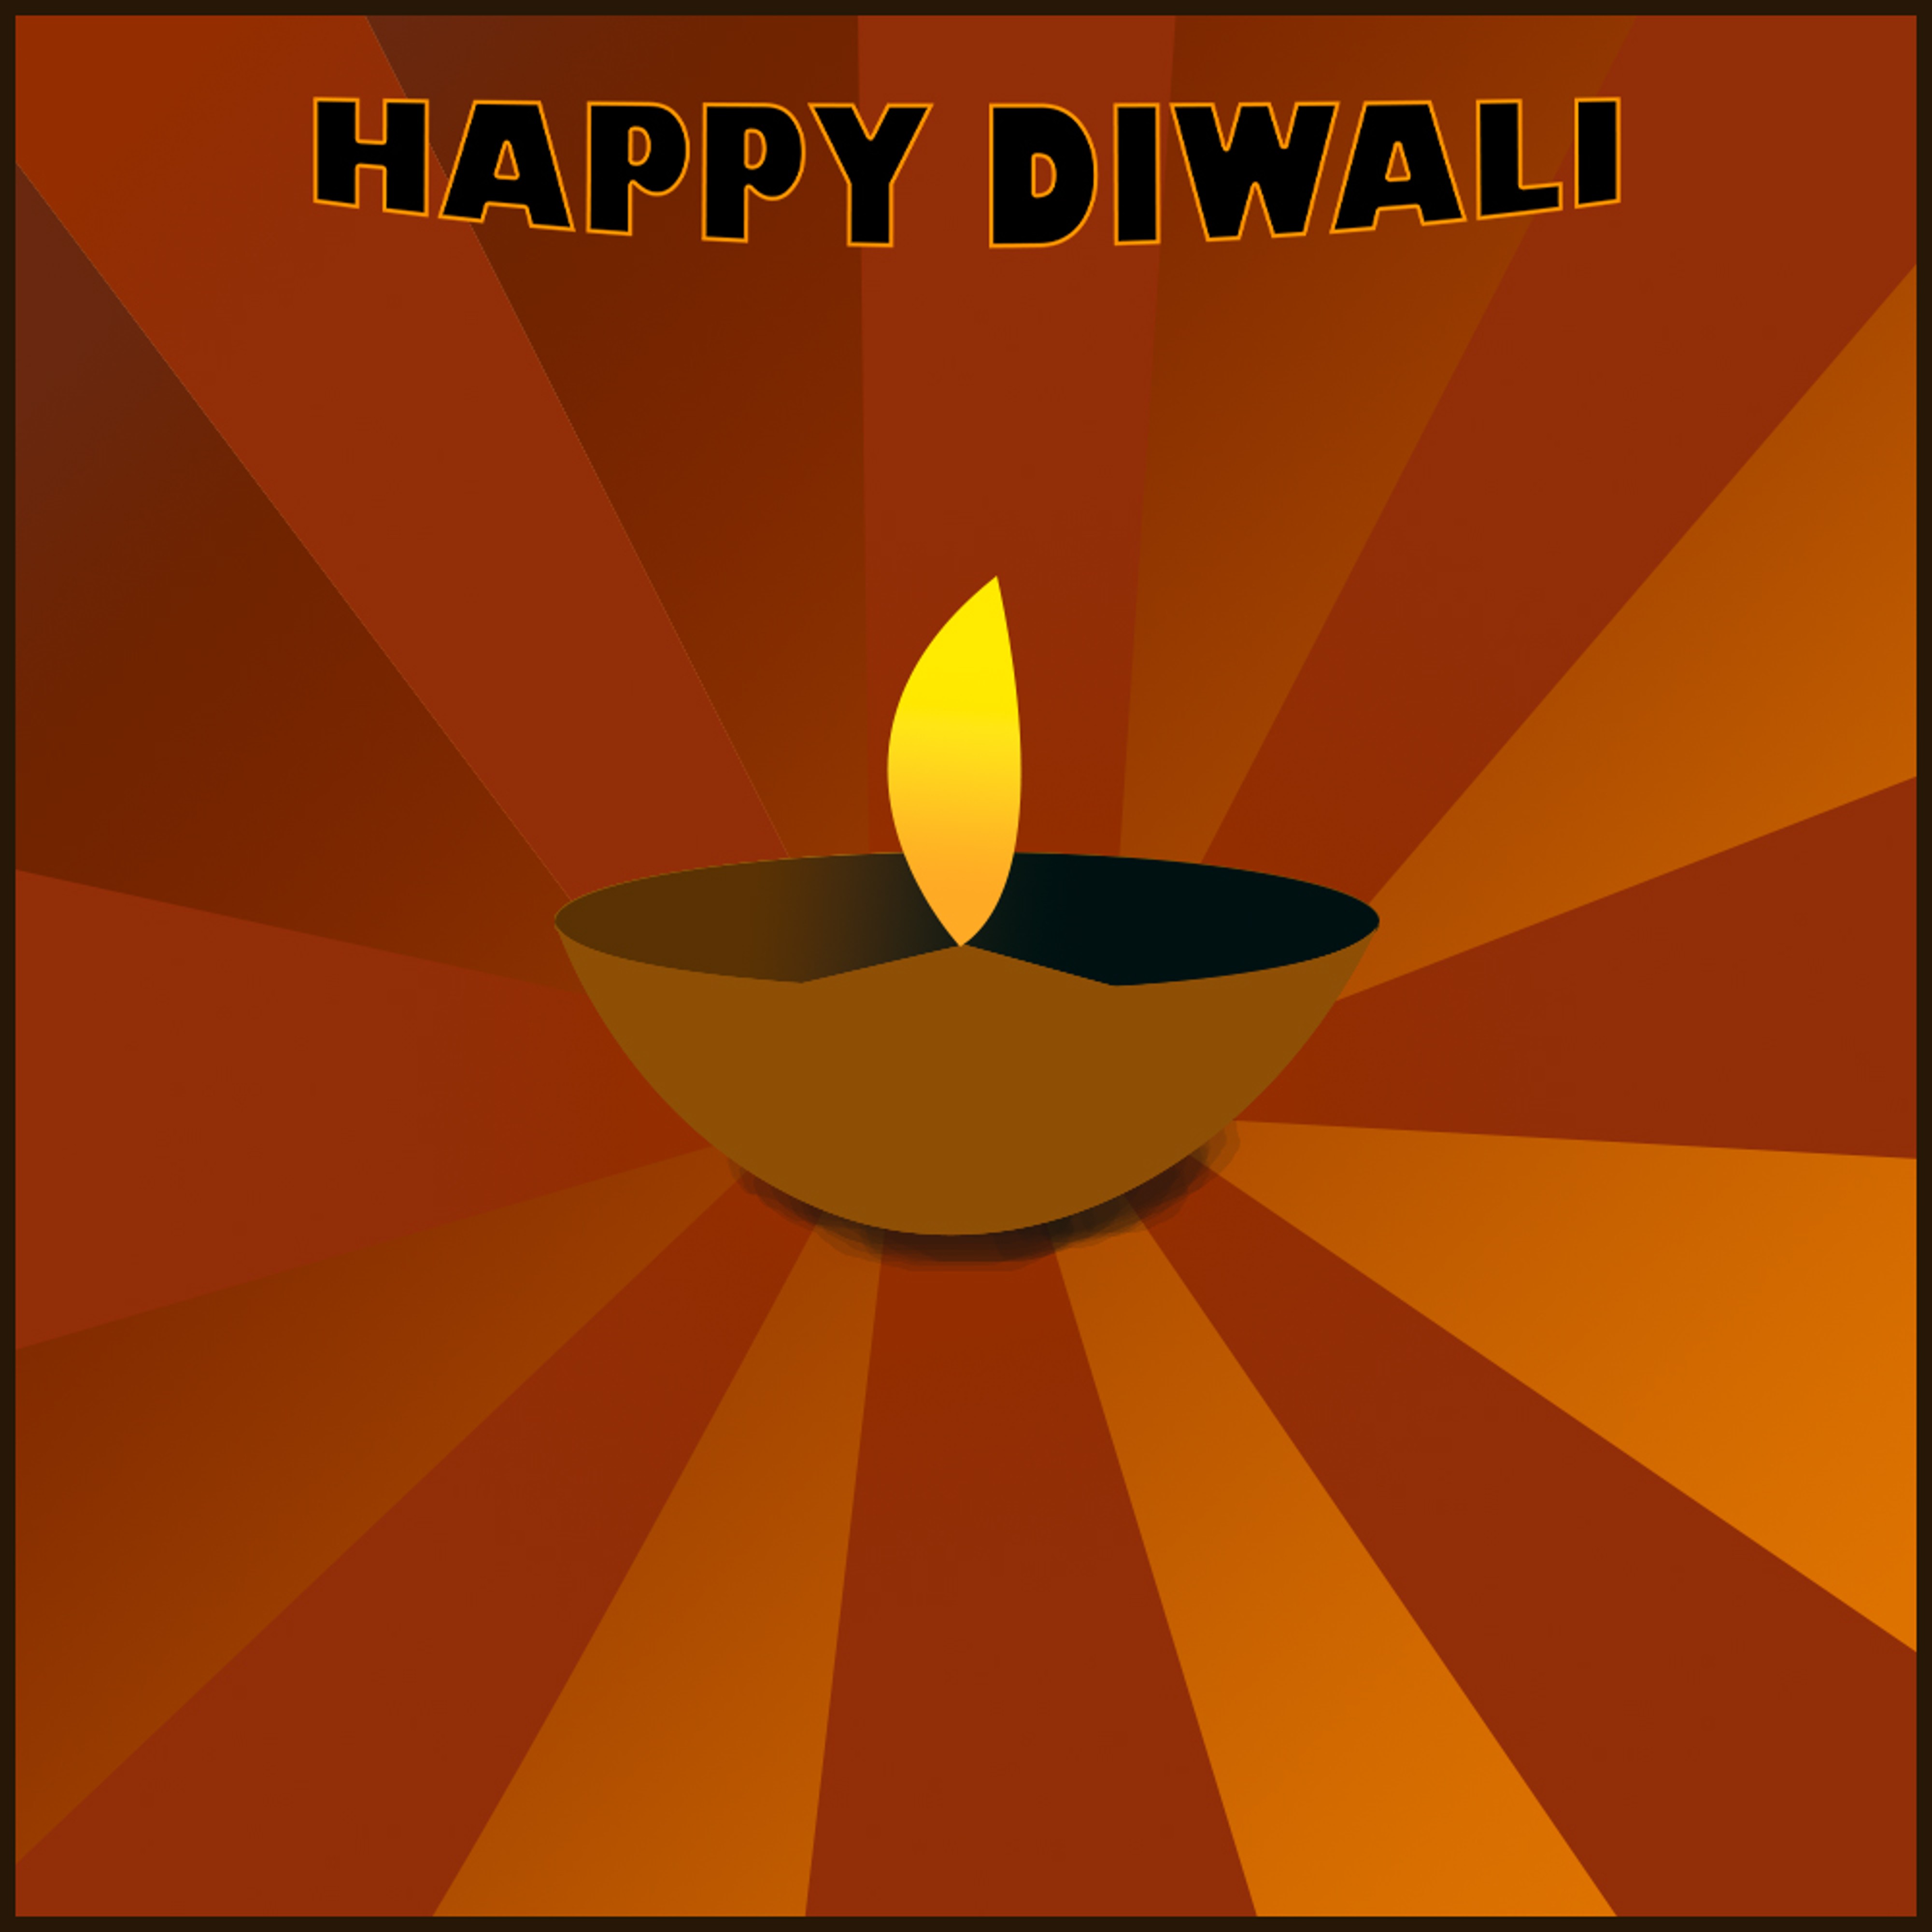 Diwali Greeting preview image.